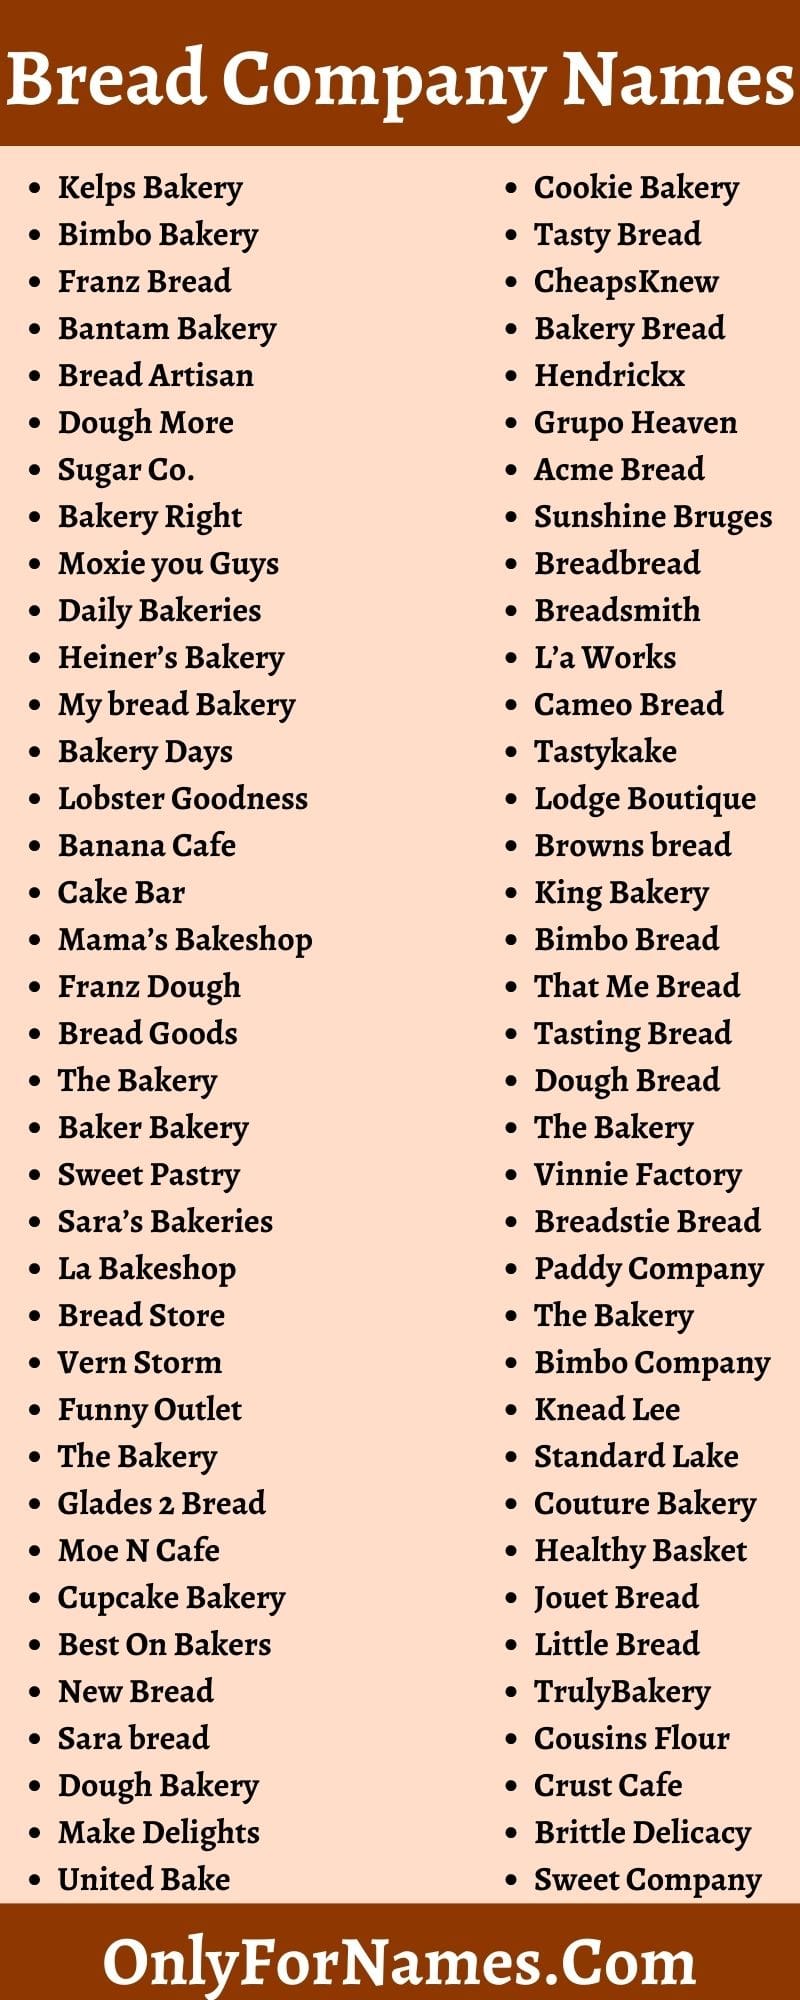 Bread Company Names